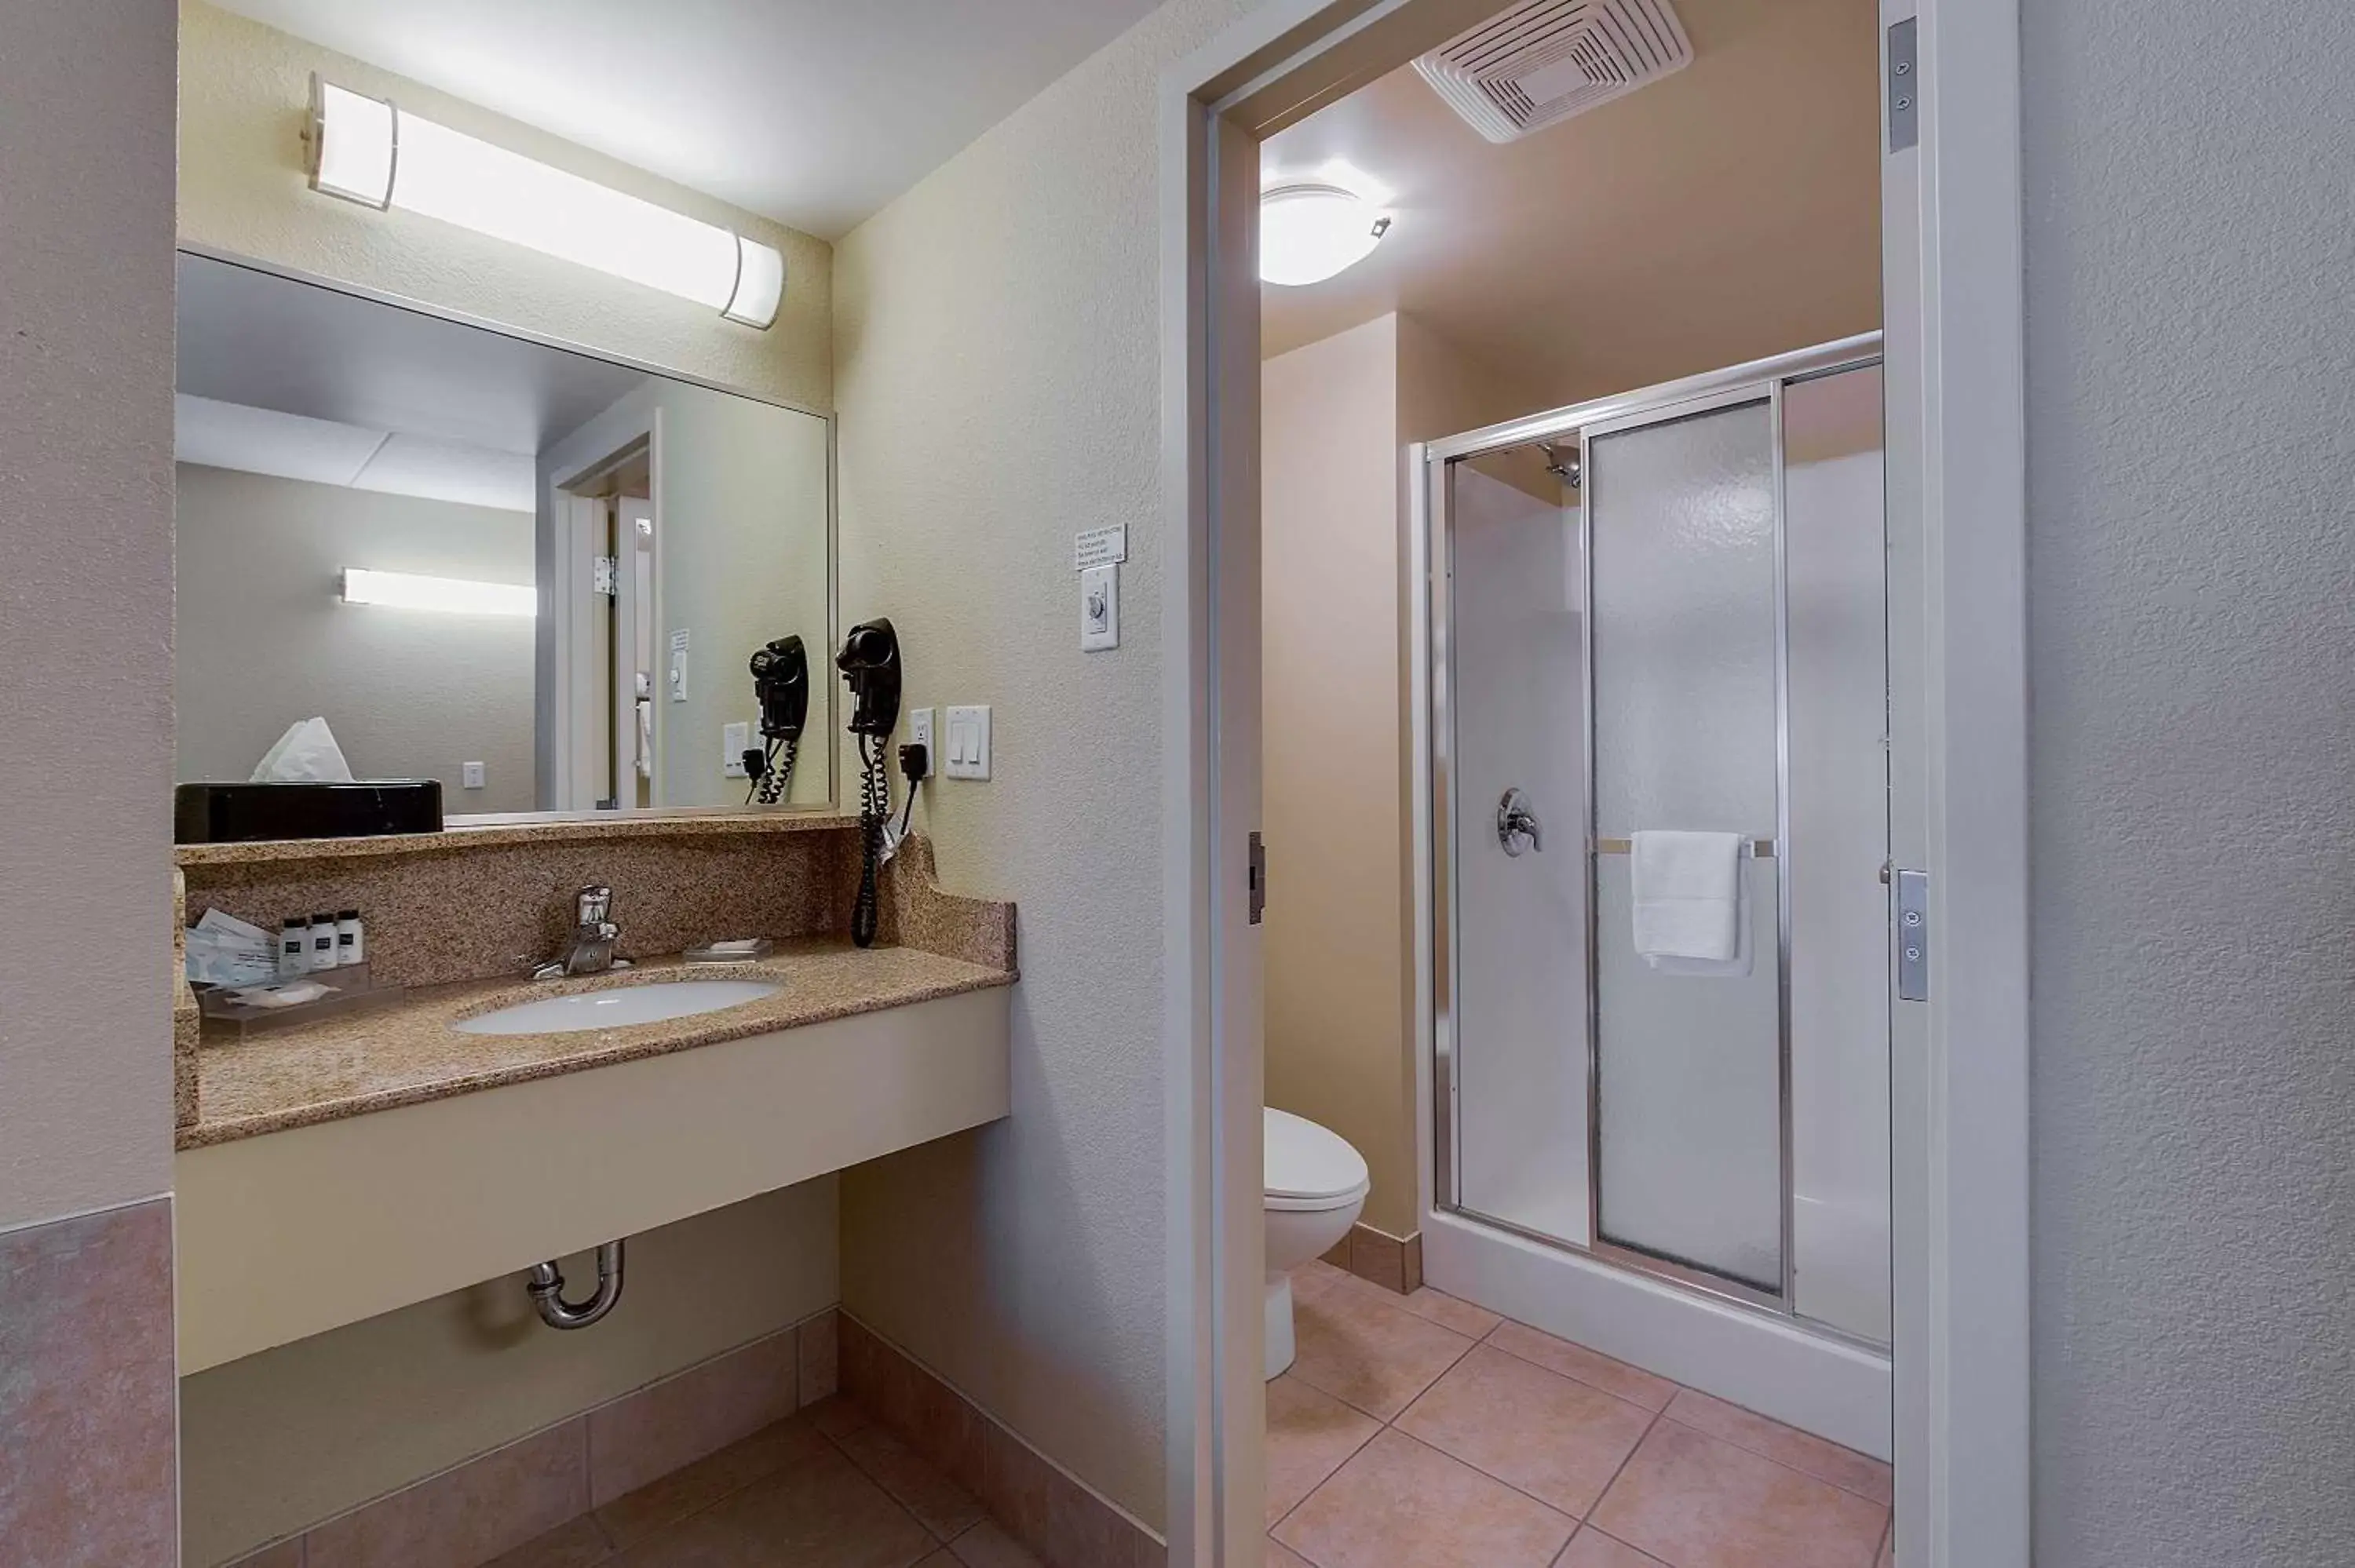 Bathroom in Country Inn & Suites by Radisson, Niagara Falls, ON